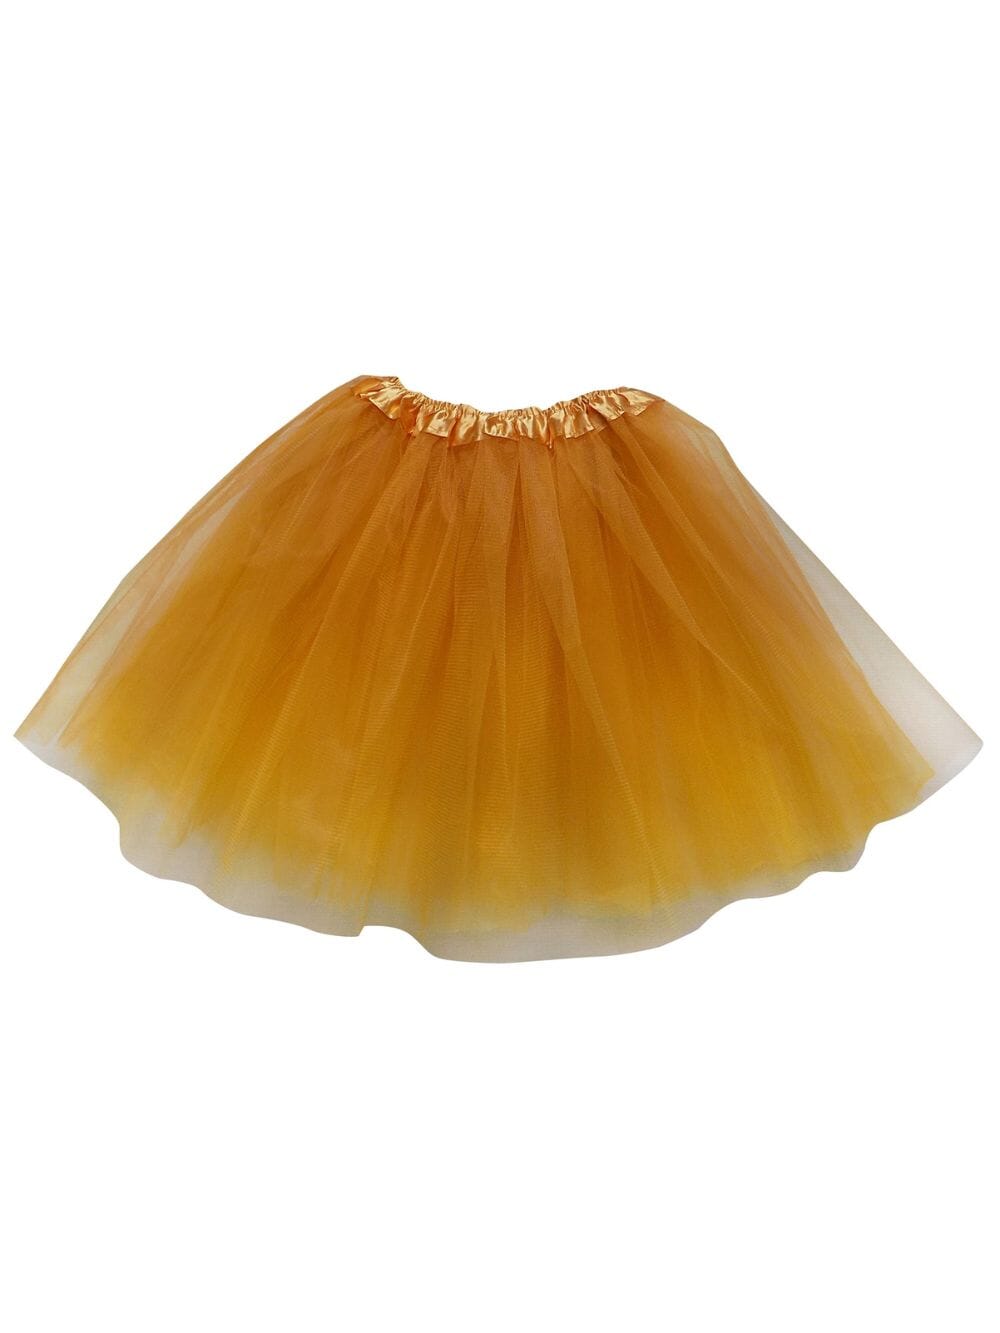 Goldenrod Plus Size Adult Tutu Skirt - Women's Plus Size 3- Layer Basic Ballet Costume Dance Tutus - Sydney So Sweet